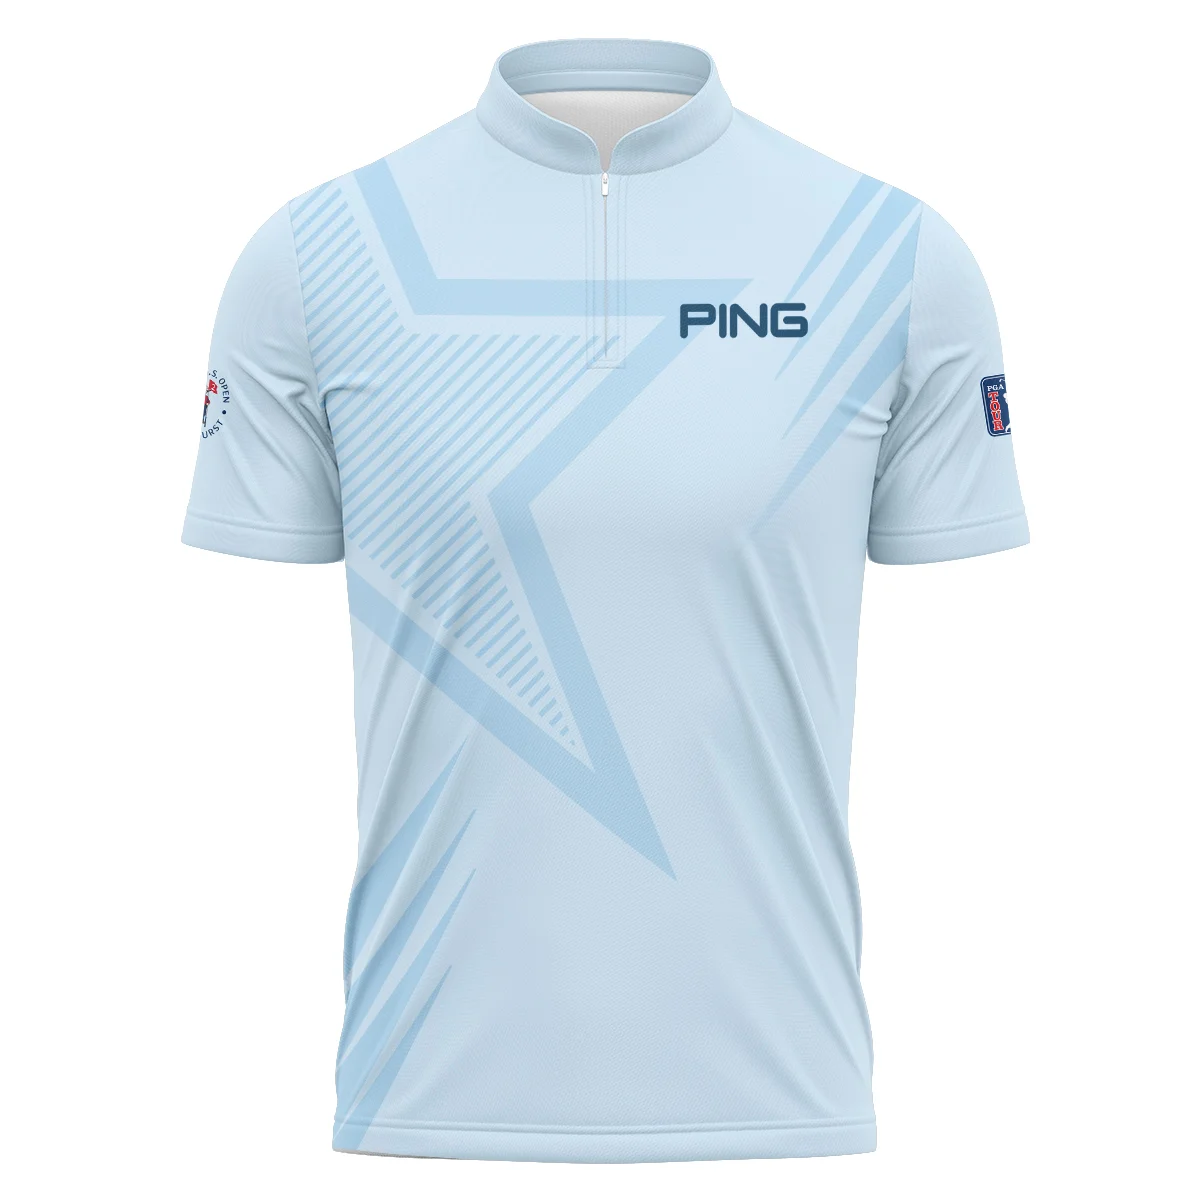 124th U.S. Open Pinehurst Golf Star Line Pattern Light Blue Ping Polo Shirt Style Classic Polo Shirt For Men